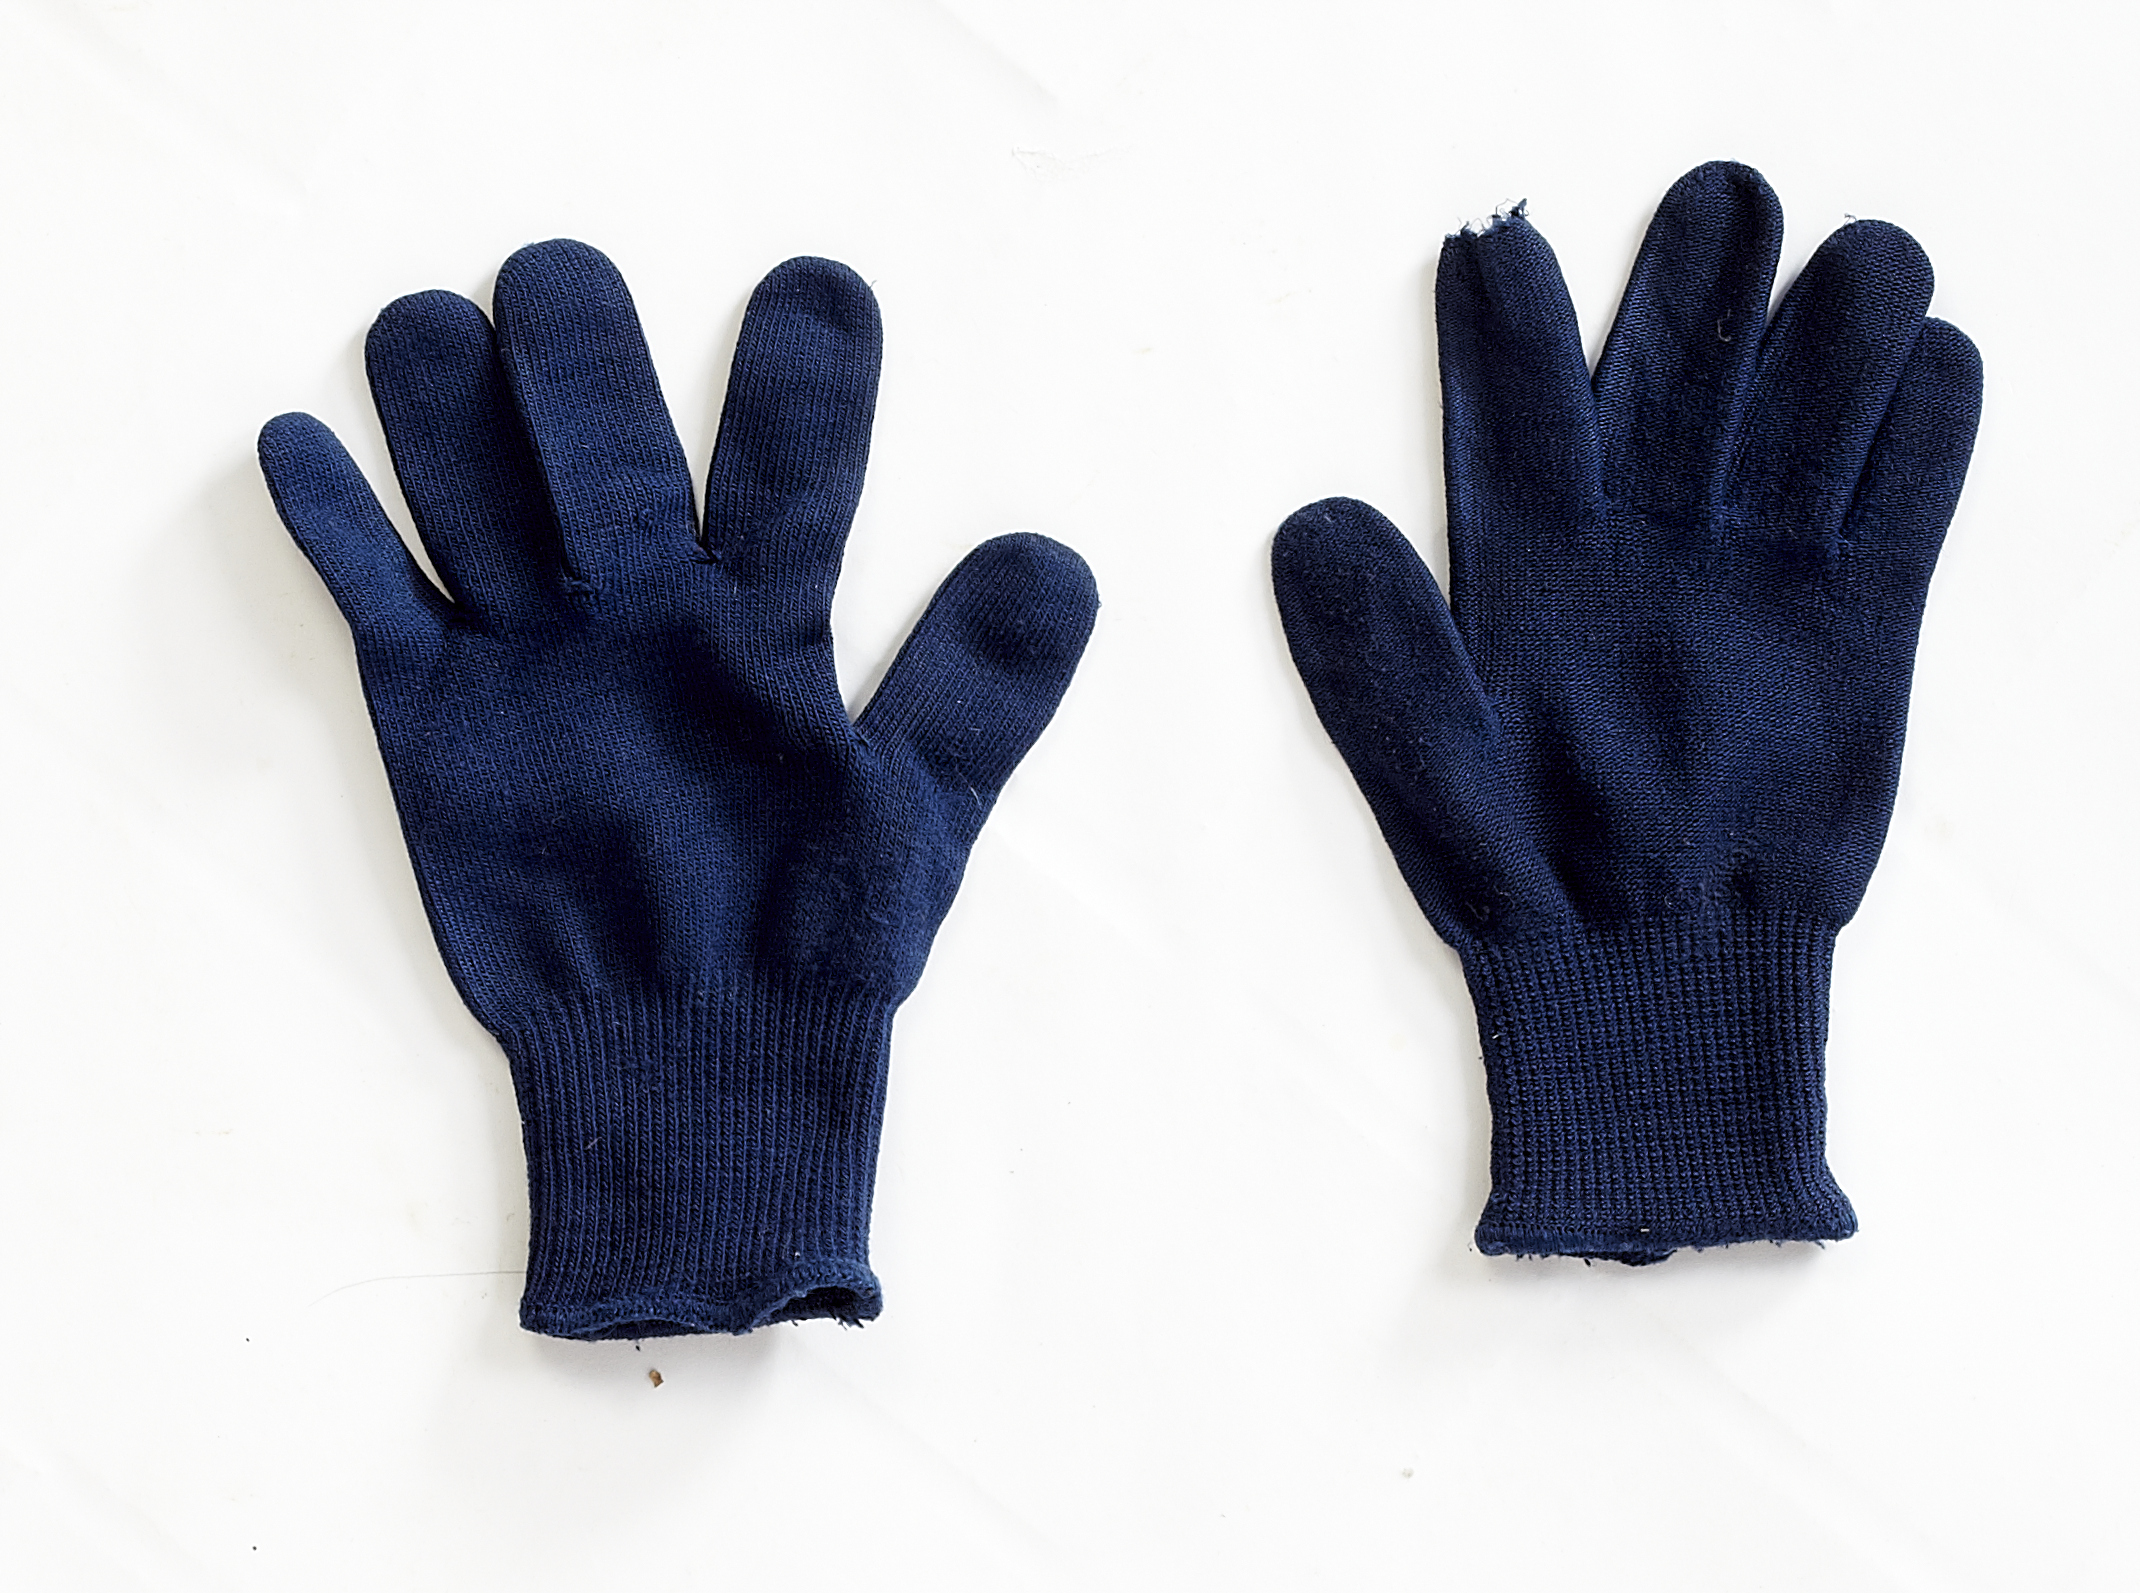 Liner gloves worn on South Pole trek